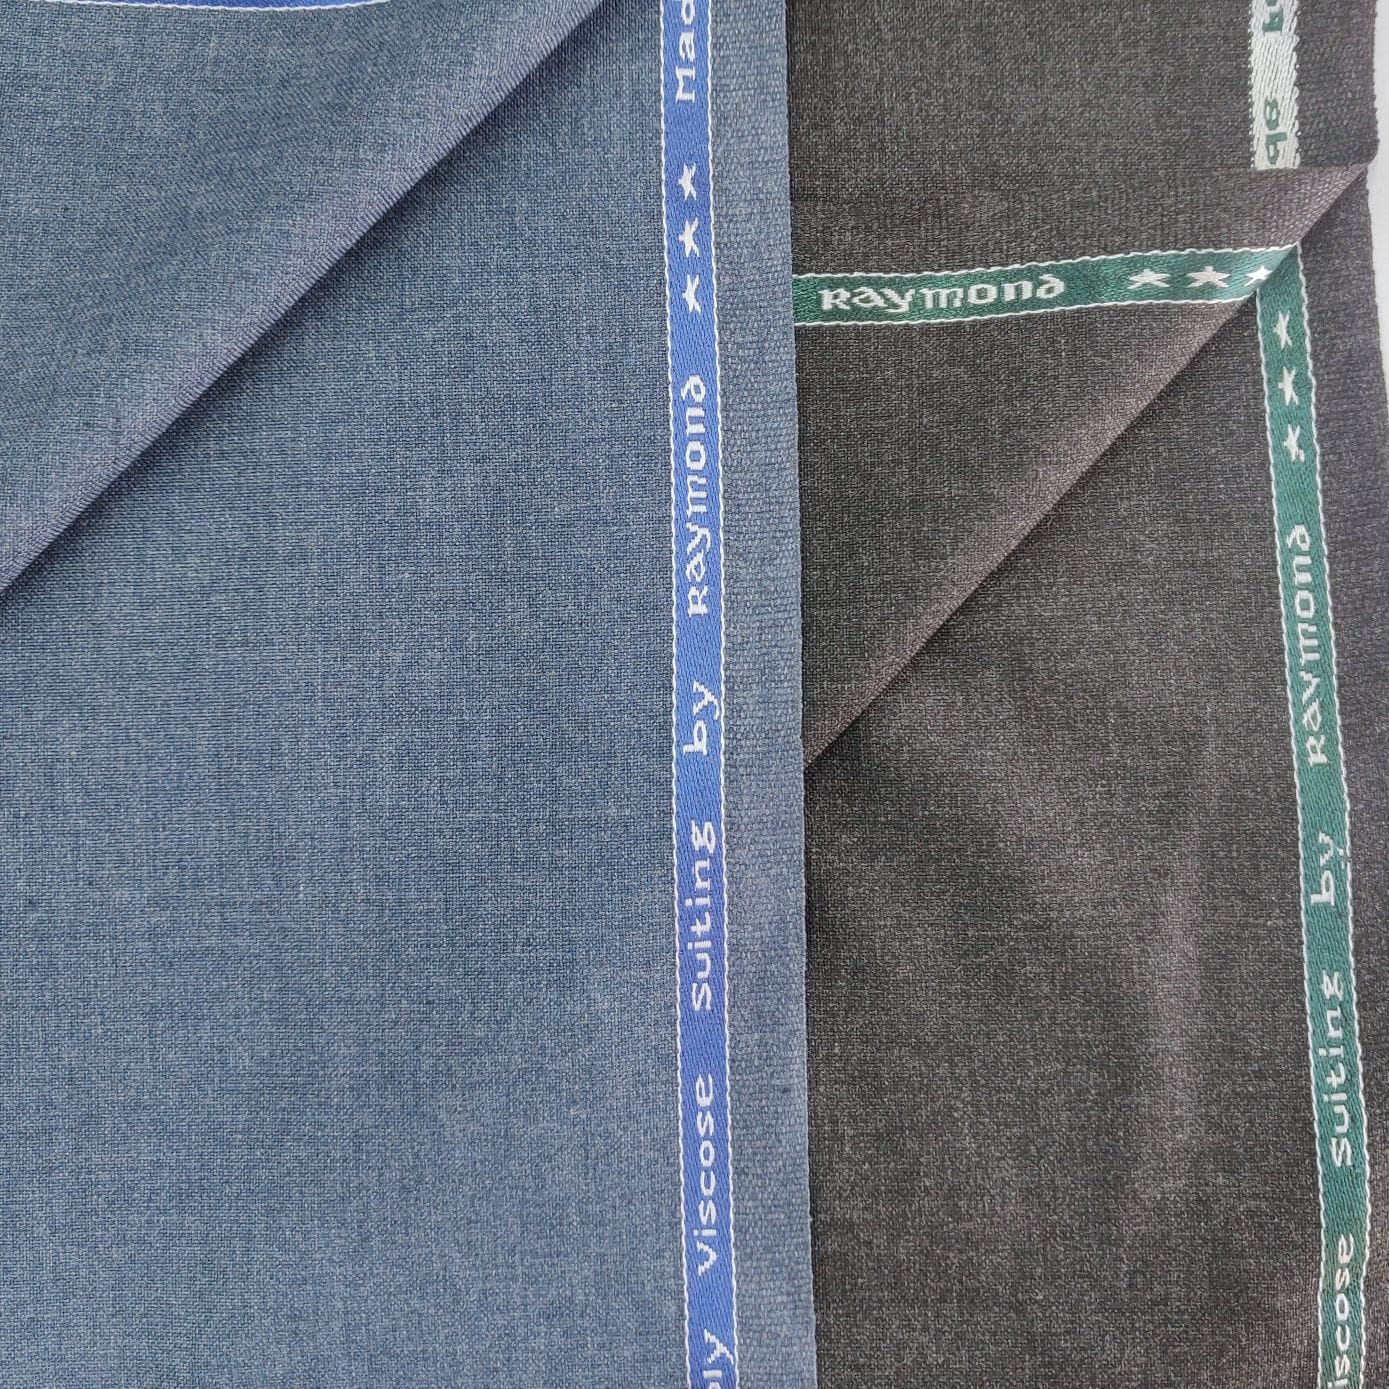 Raymond Pure Wool Solid Trouser Fabric Price in India - Buy Raymond Pure  Wool Solid Trouser Fabric online at Flipkart.com